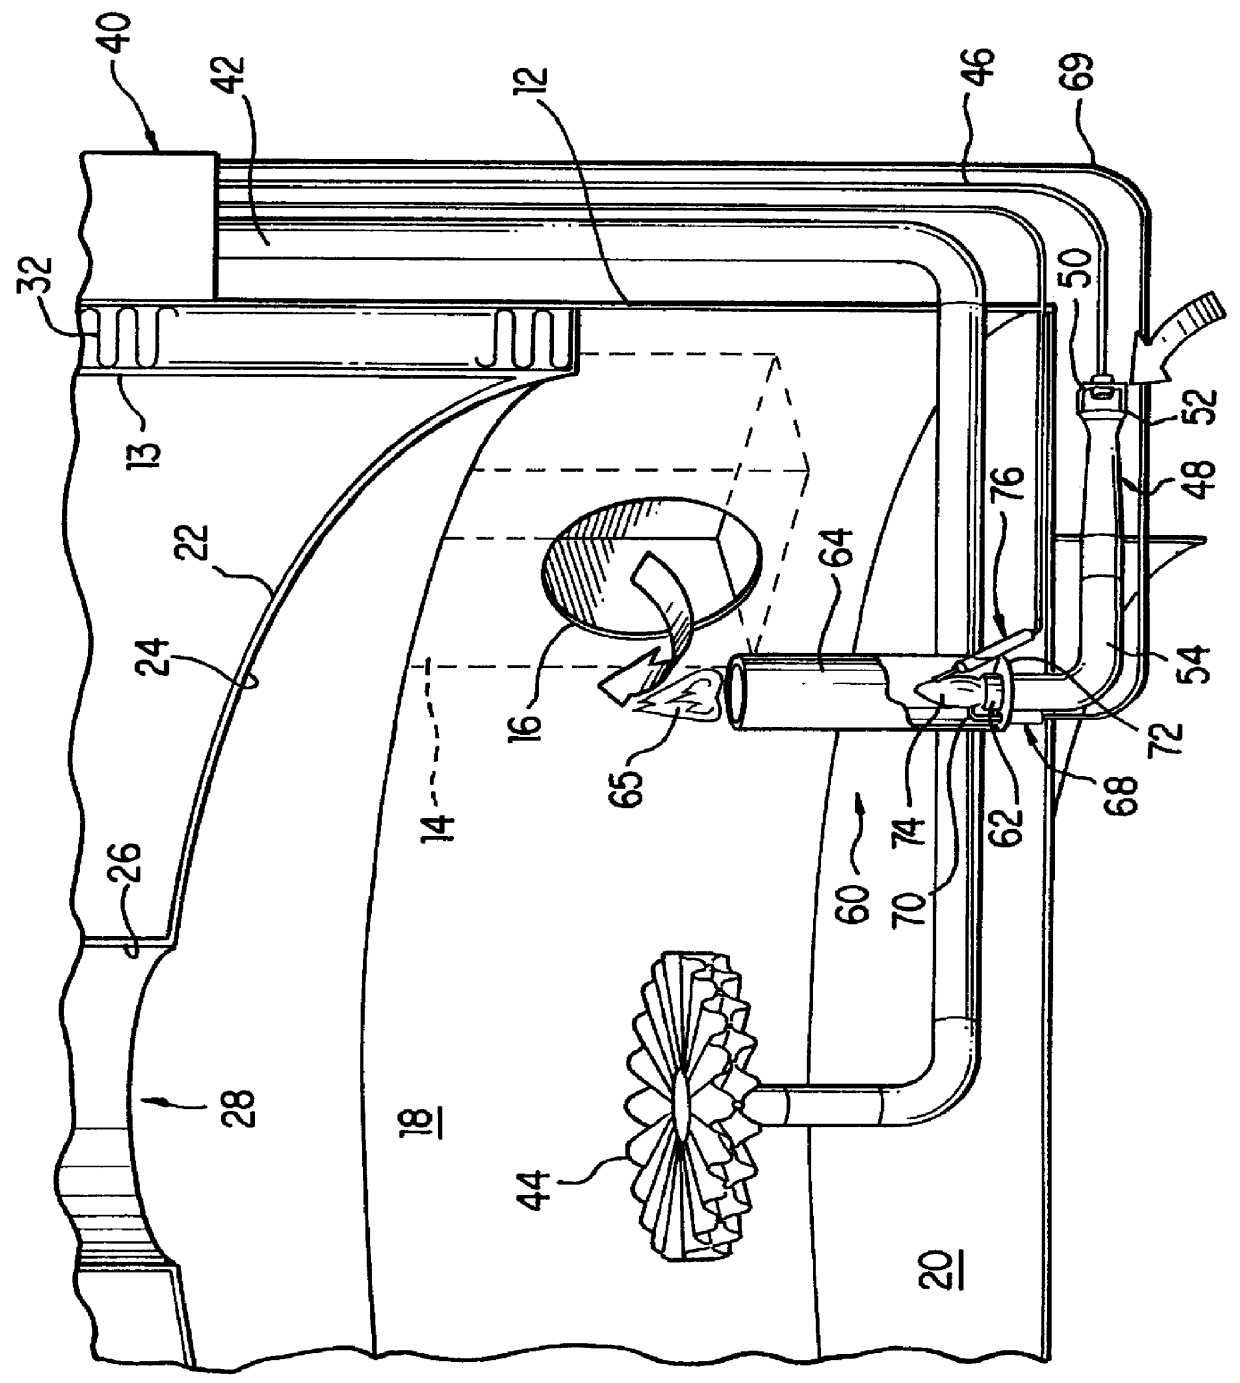 Pilot burner apparatus and method for operating